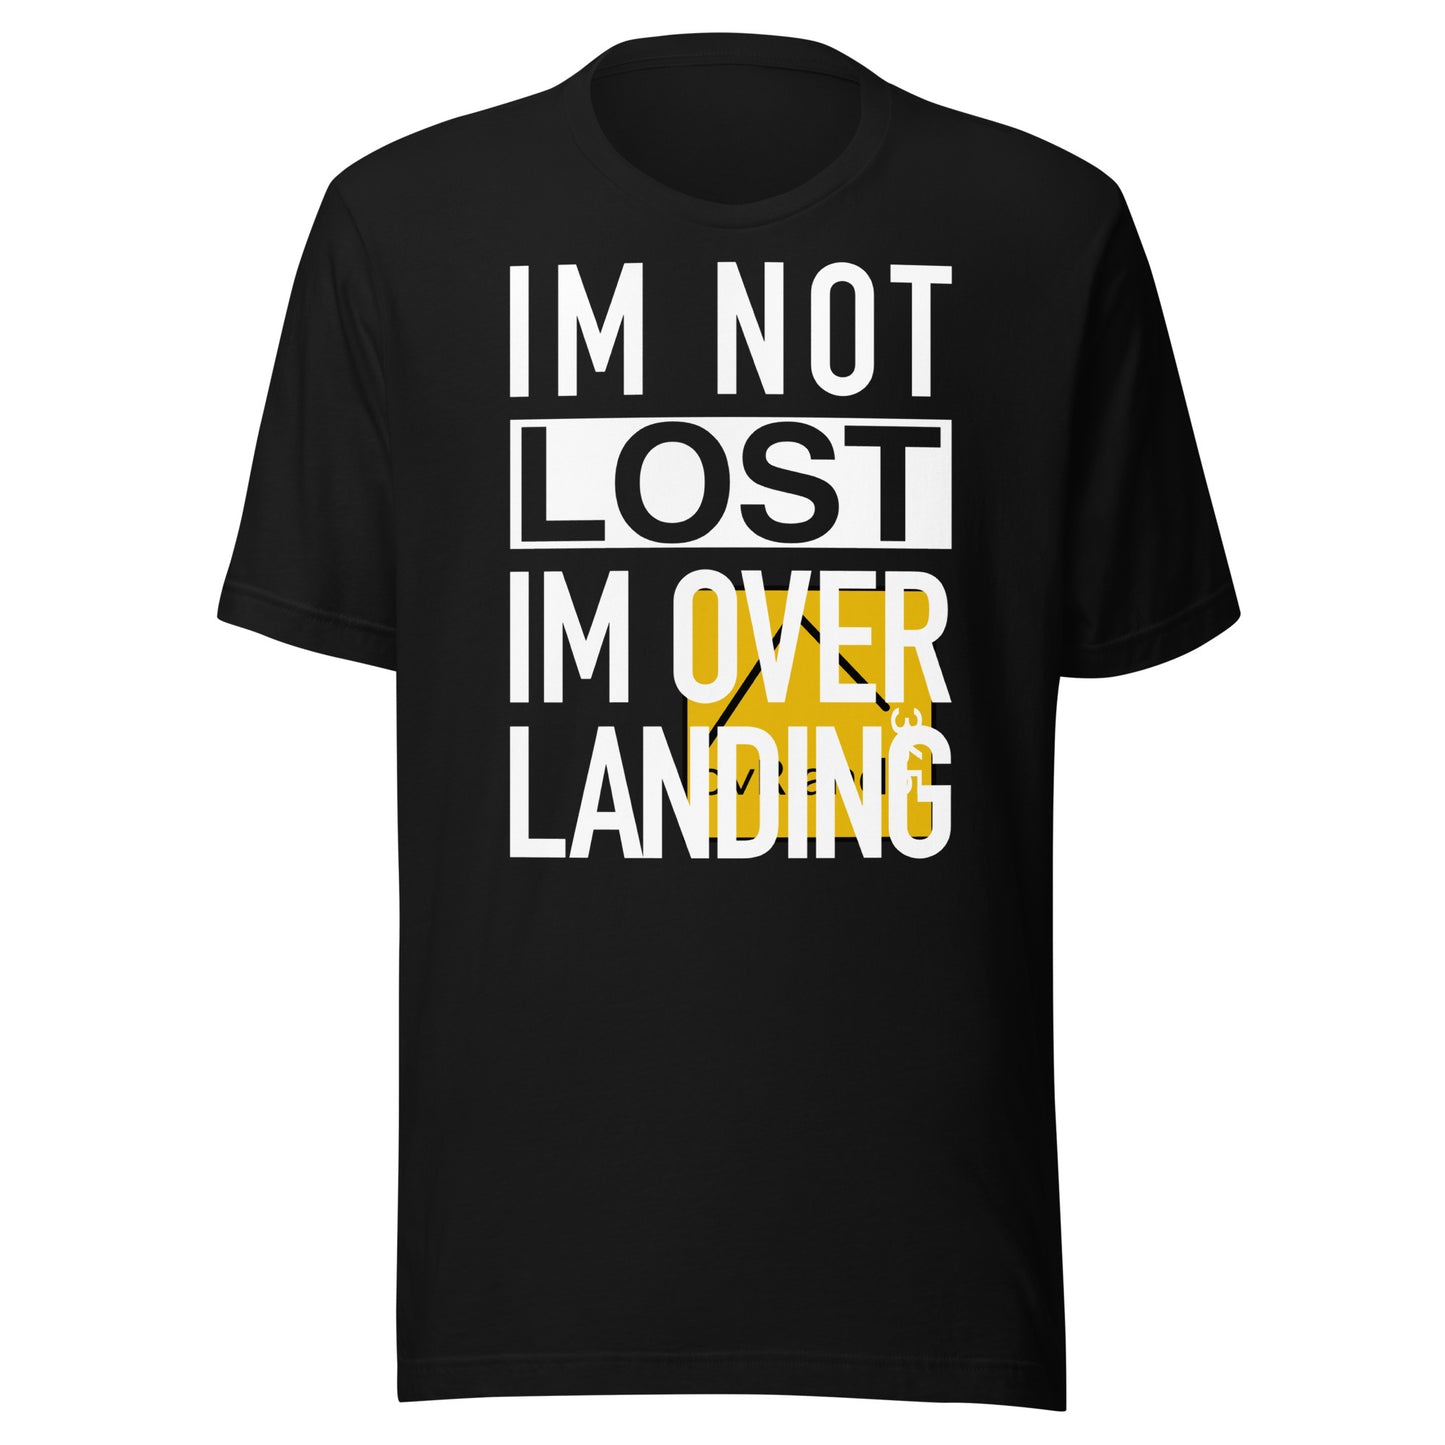 IM NOT LOST IM OVER LANDING - Black t-shirt. logo misprint. overland365.com